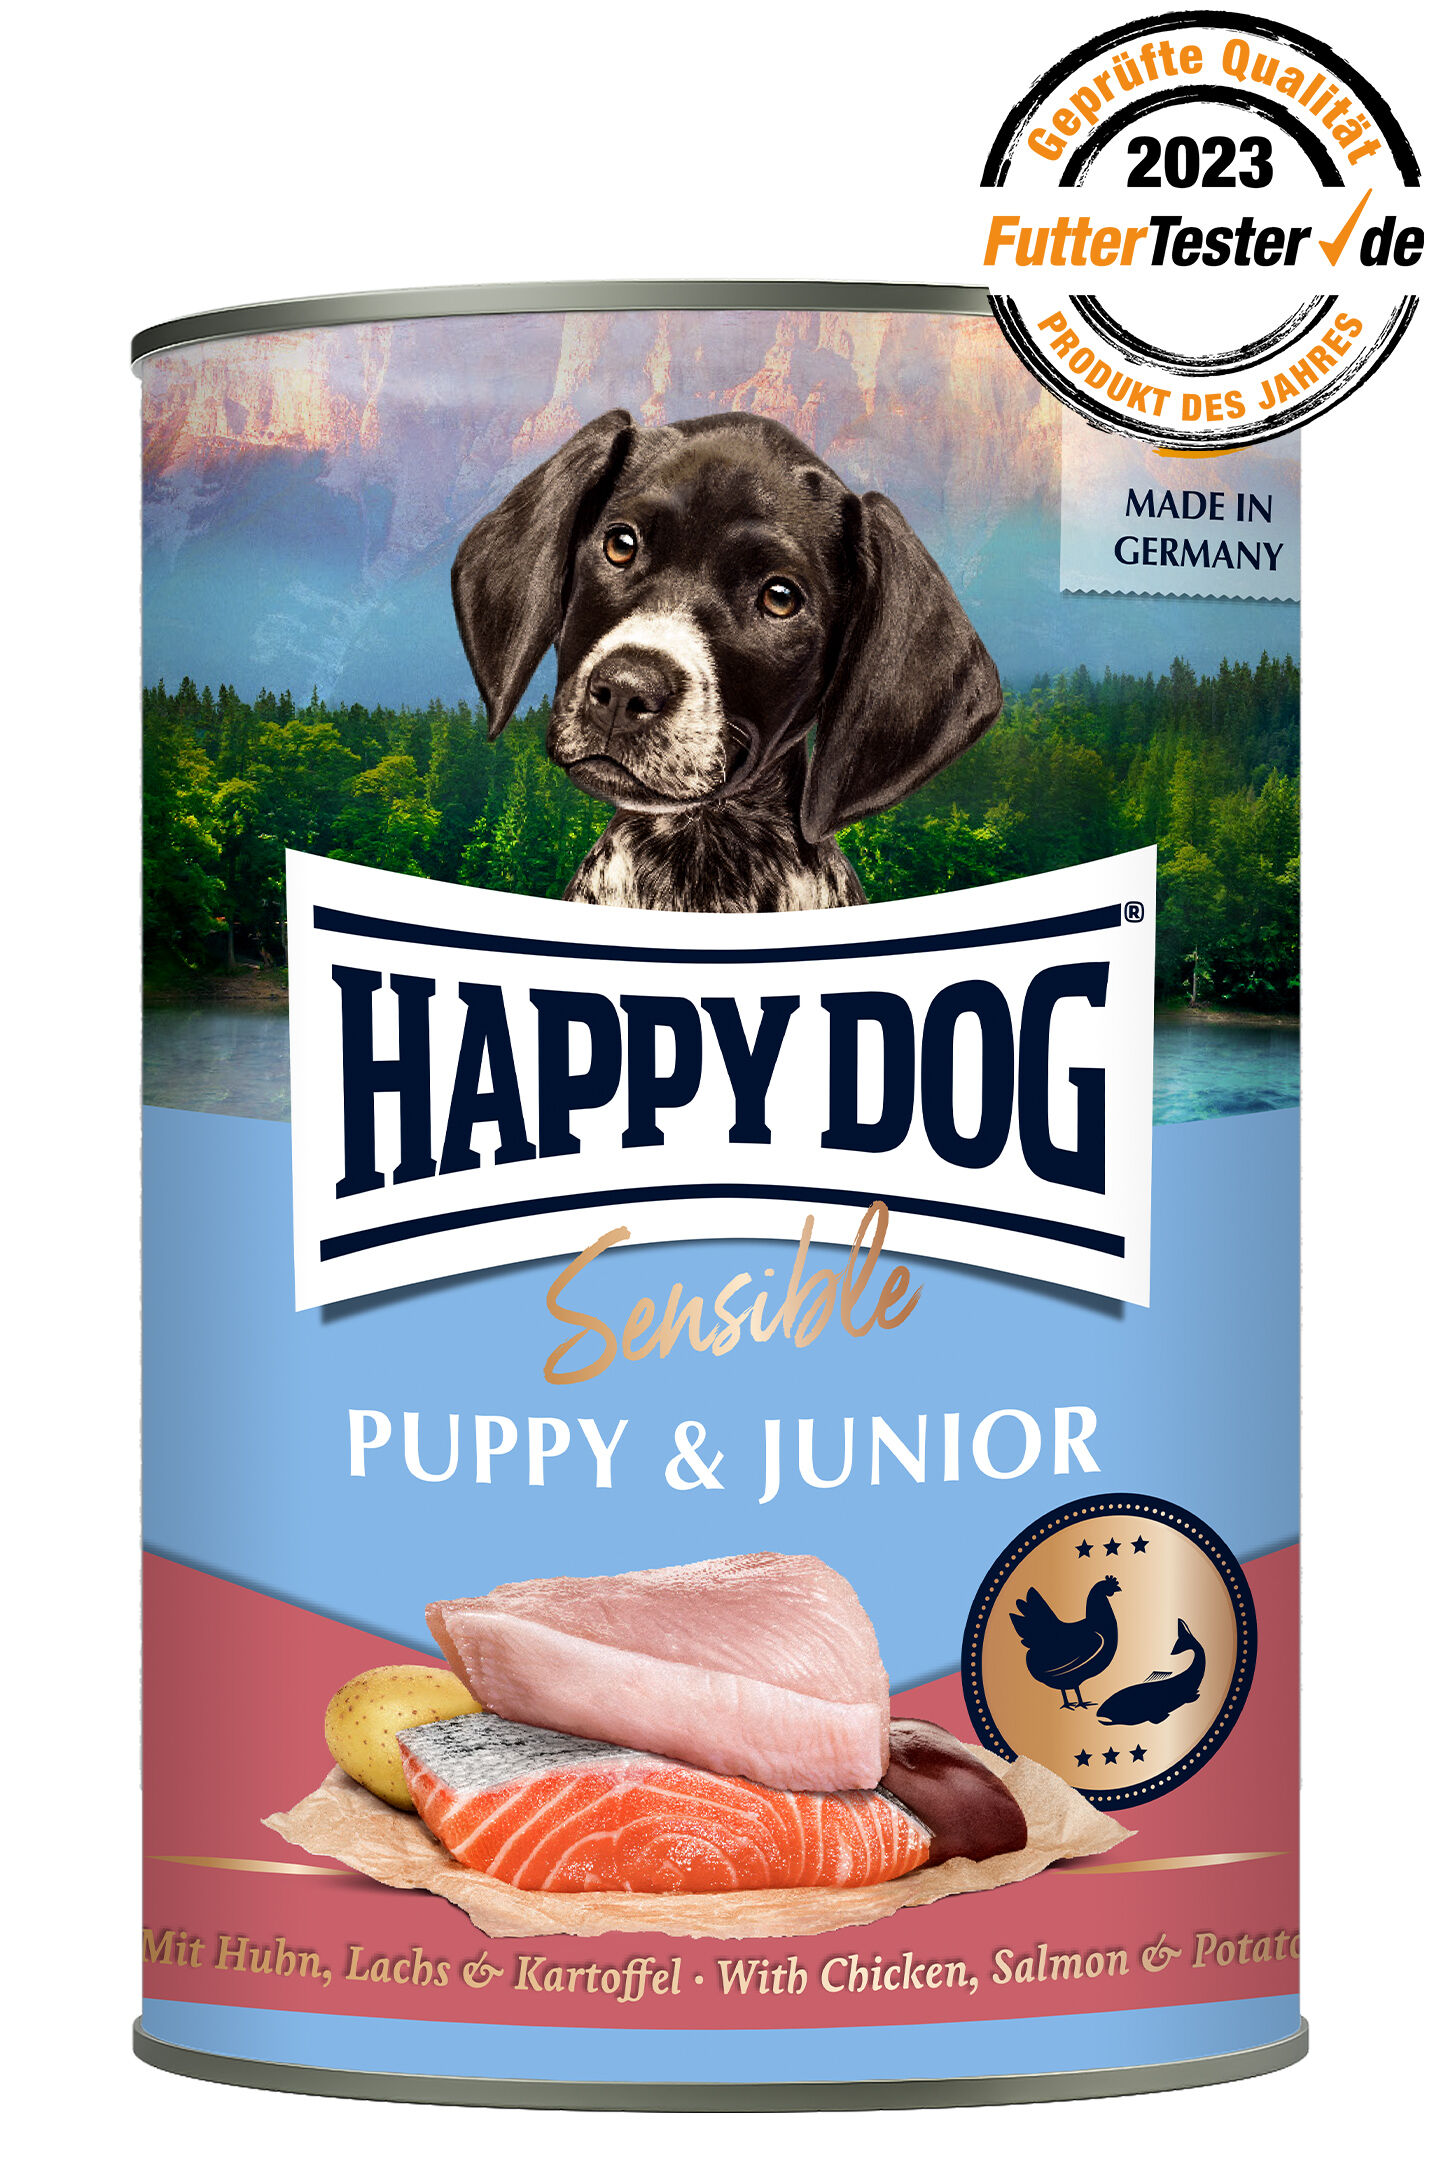 Sensible Puppy & Junior - Huhn, Lachs & Kartoffel